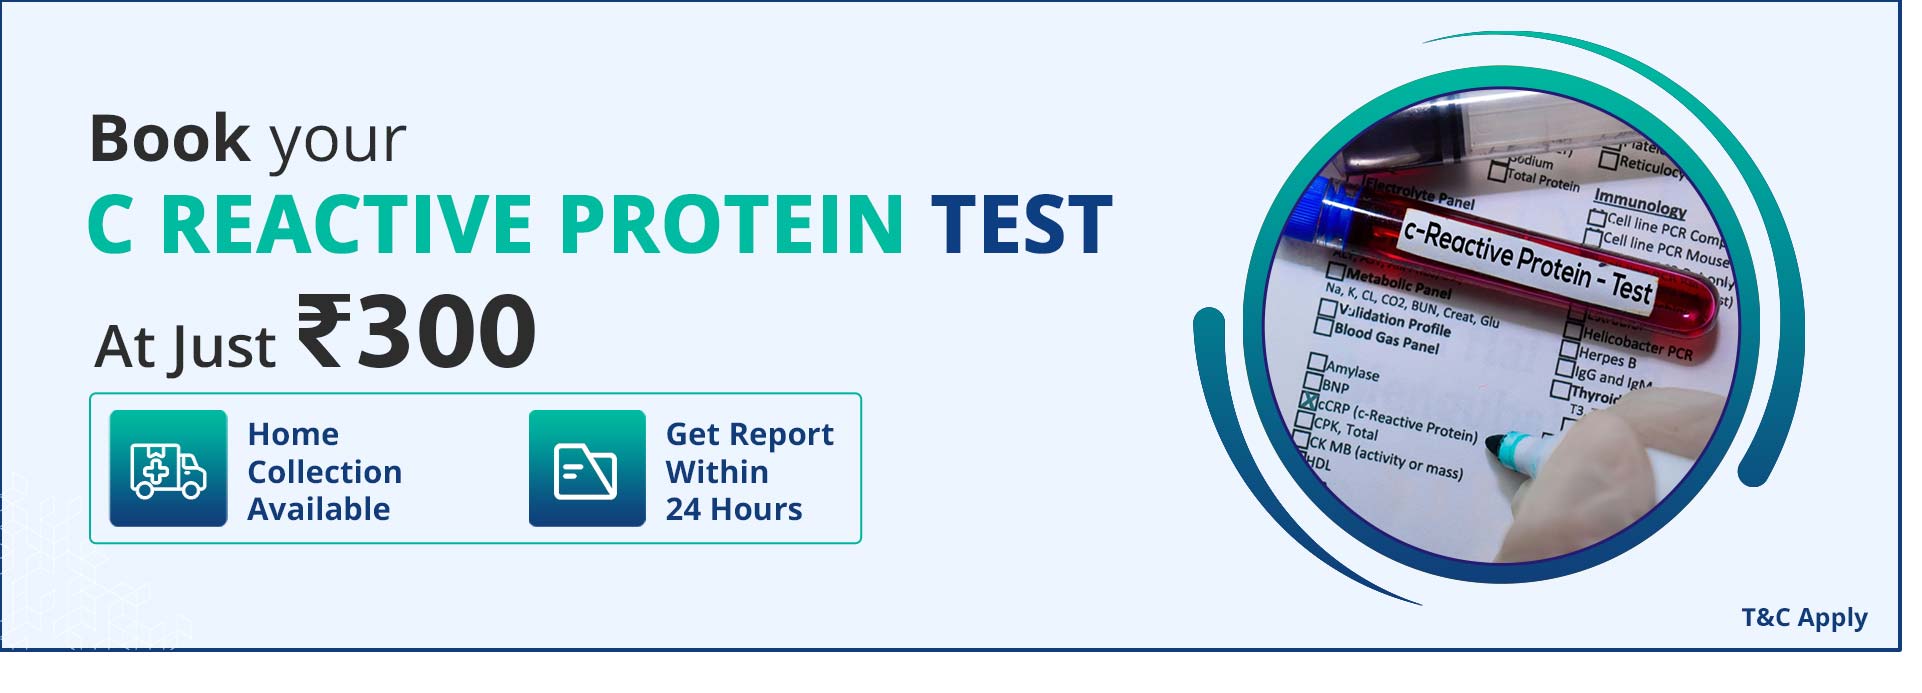 C Reactive Protein Test